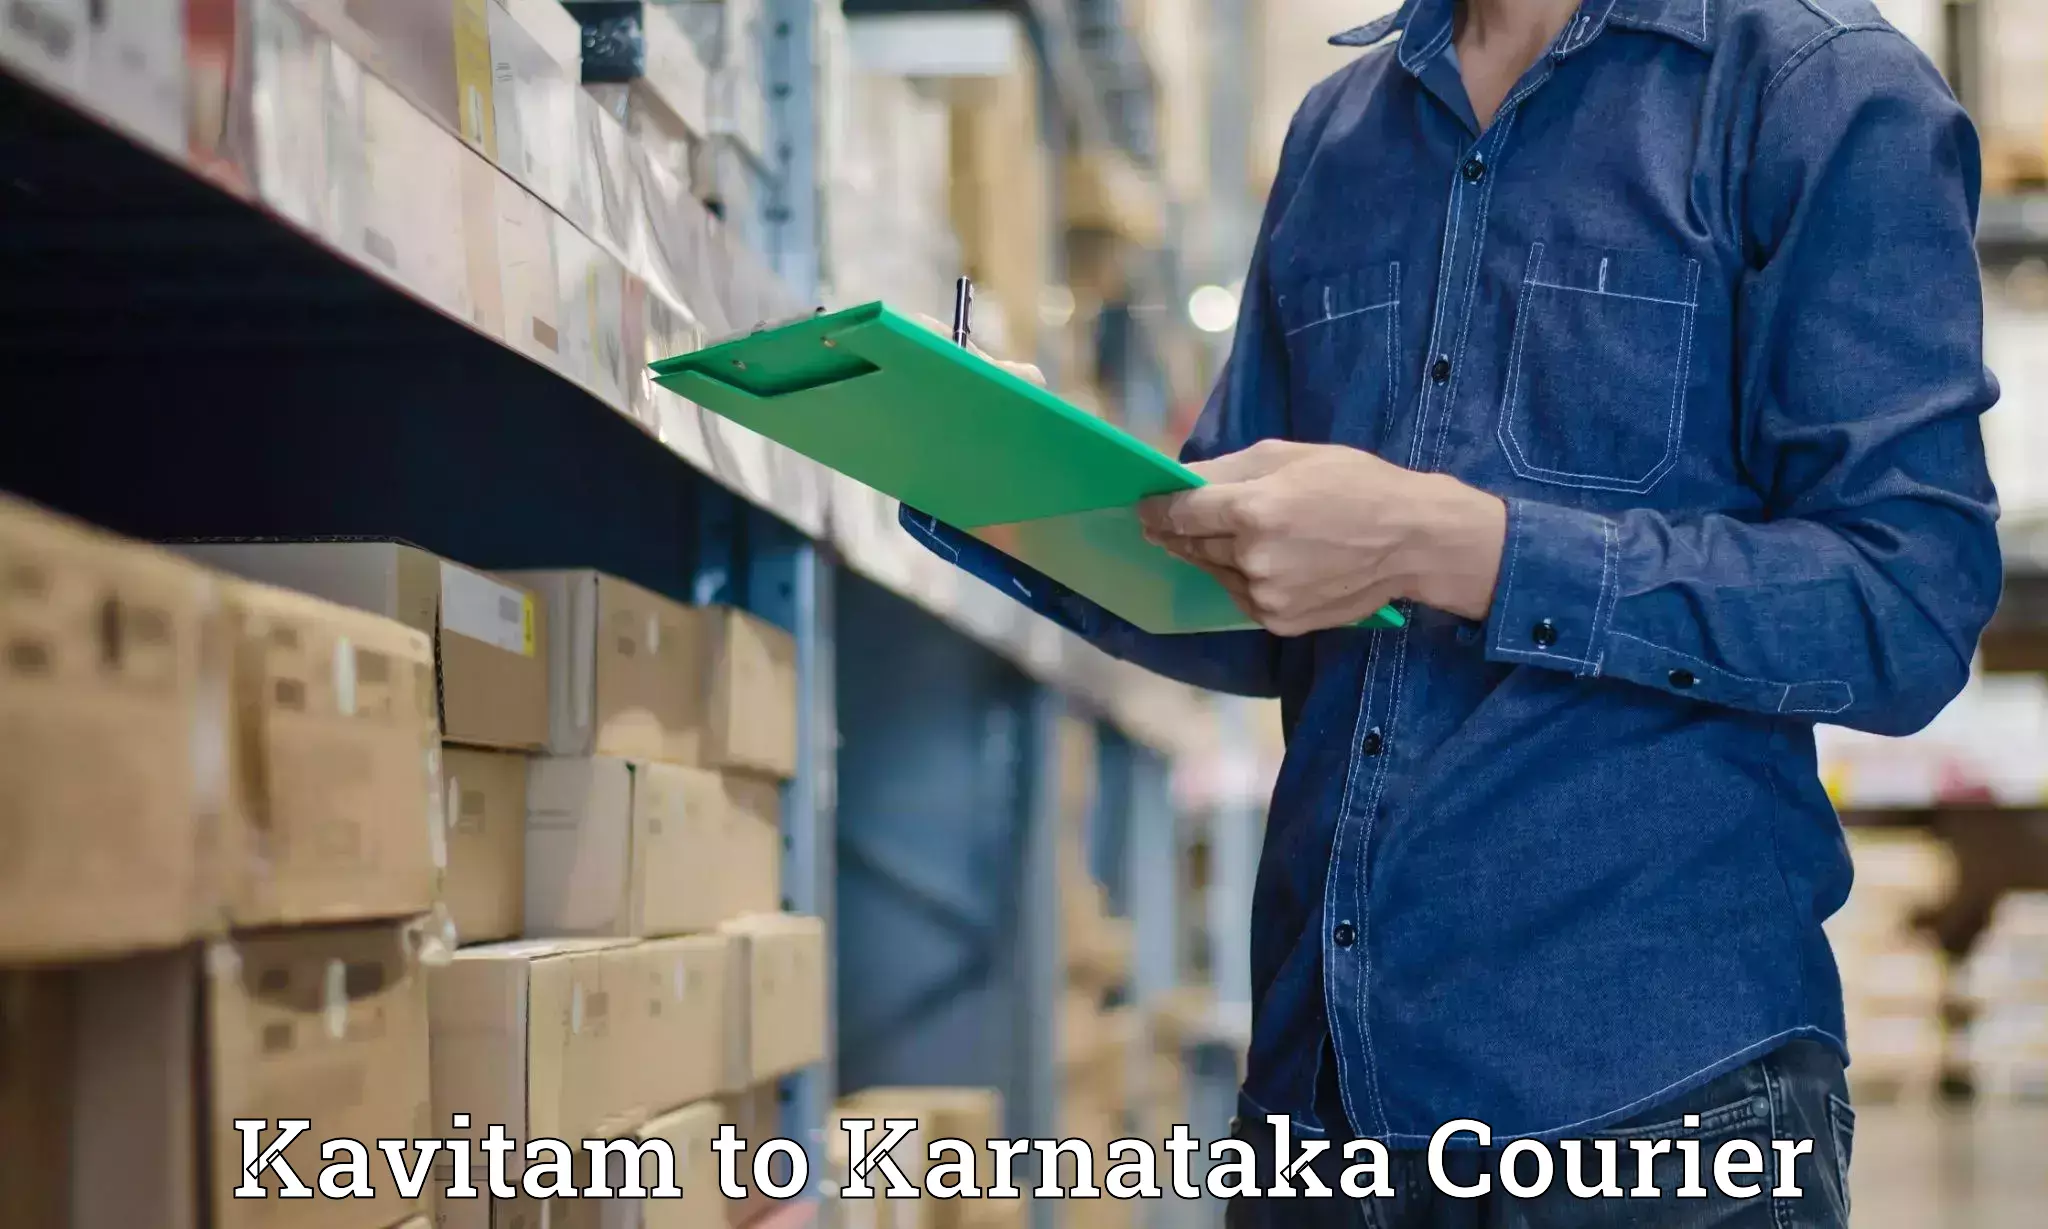 Courier service comparison Kavitam to Harohalli